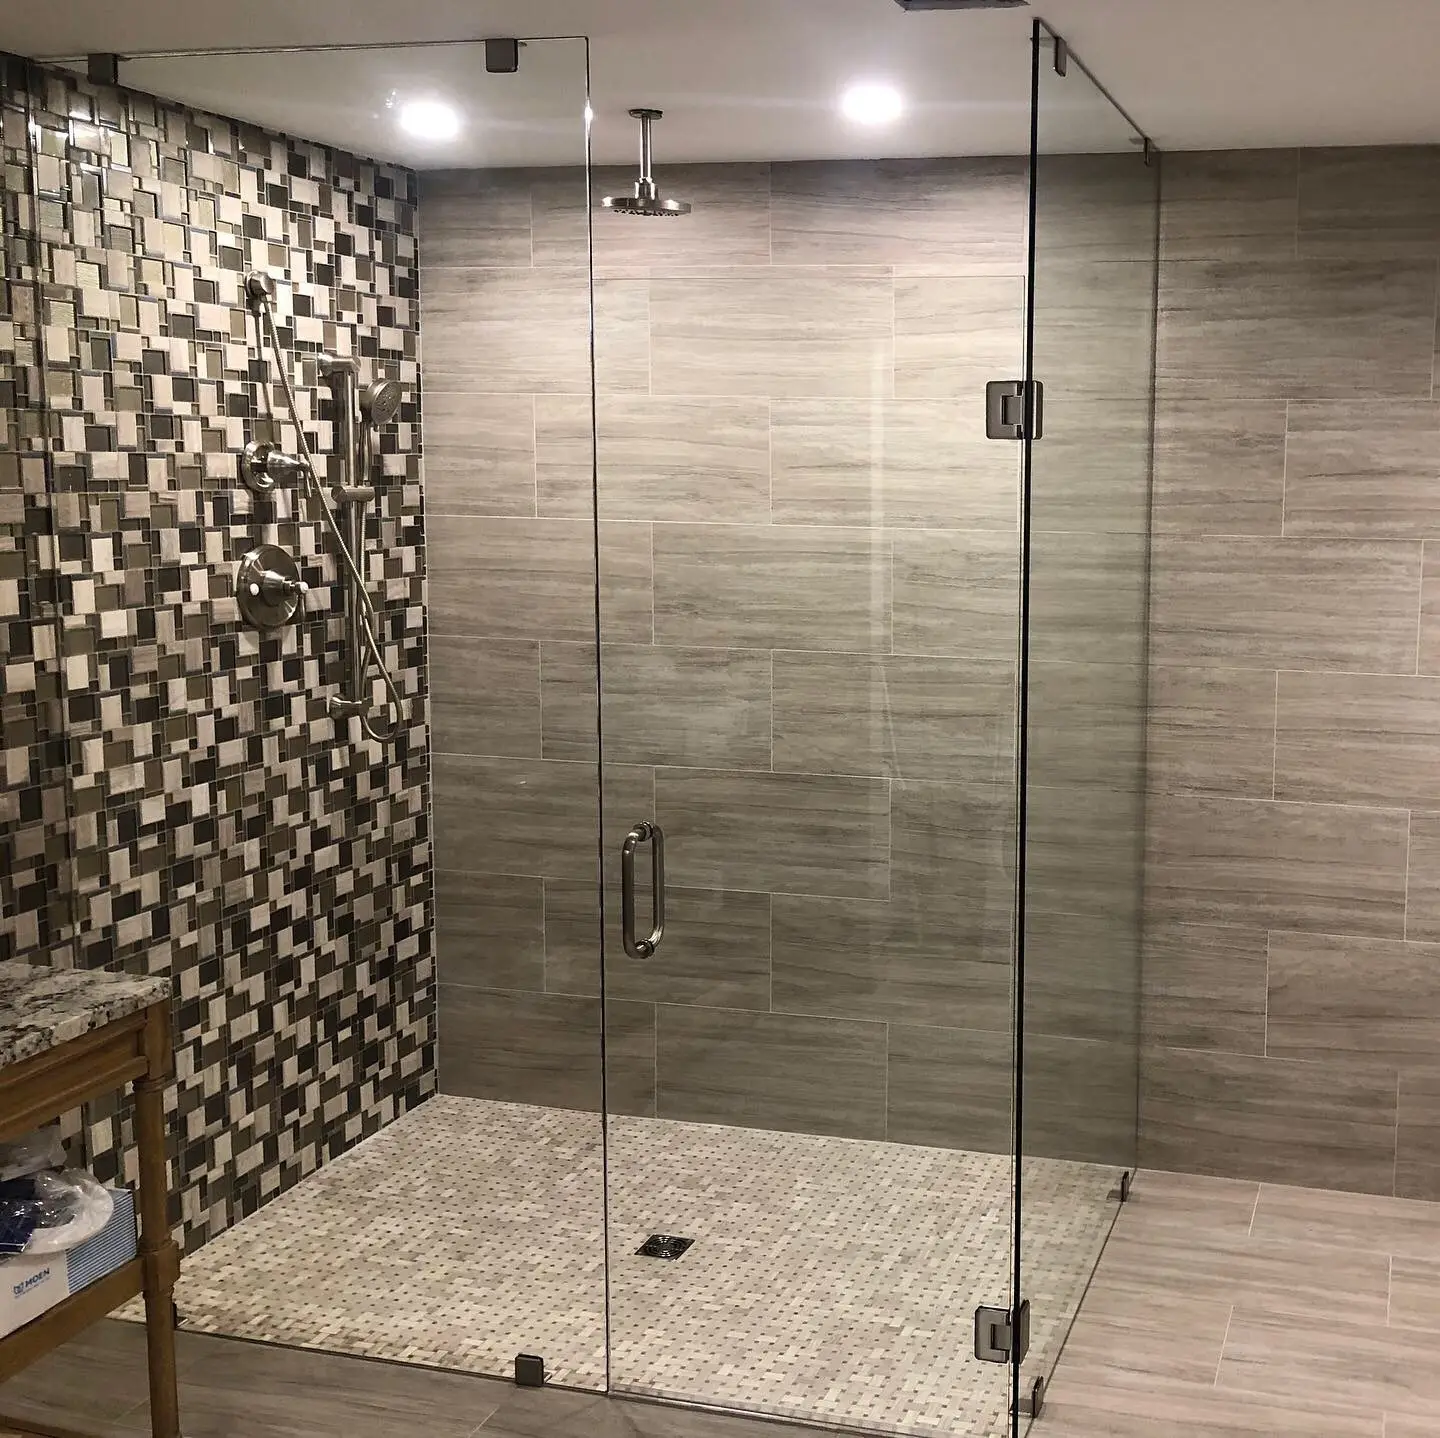 2022 New Model Aluminum Framed Corner Shower Enclosure at Bathroom with Easy Clean 8mm Glass